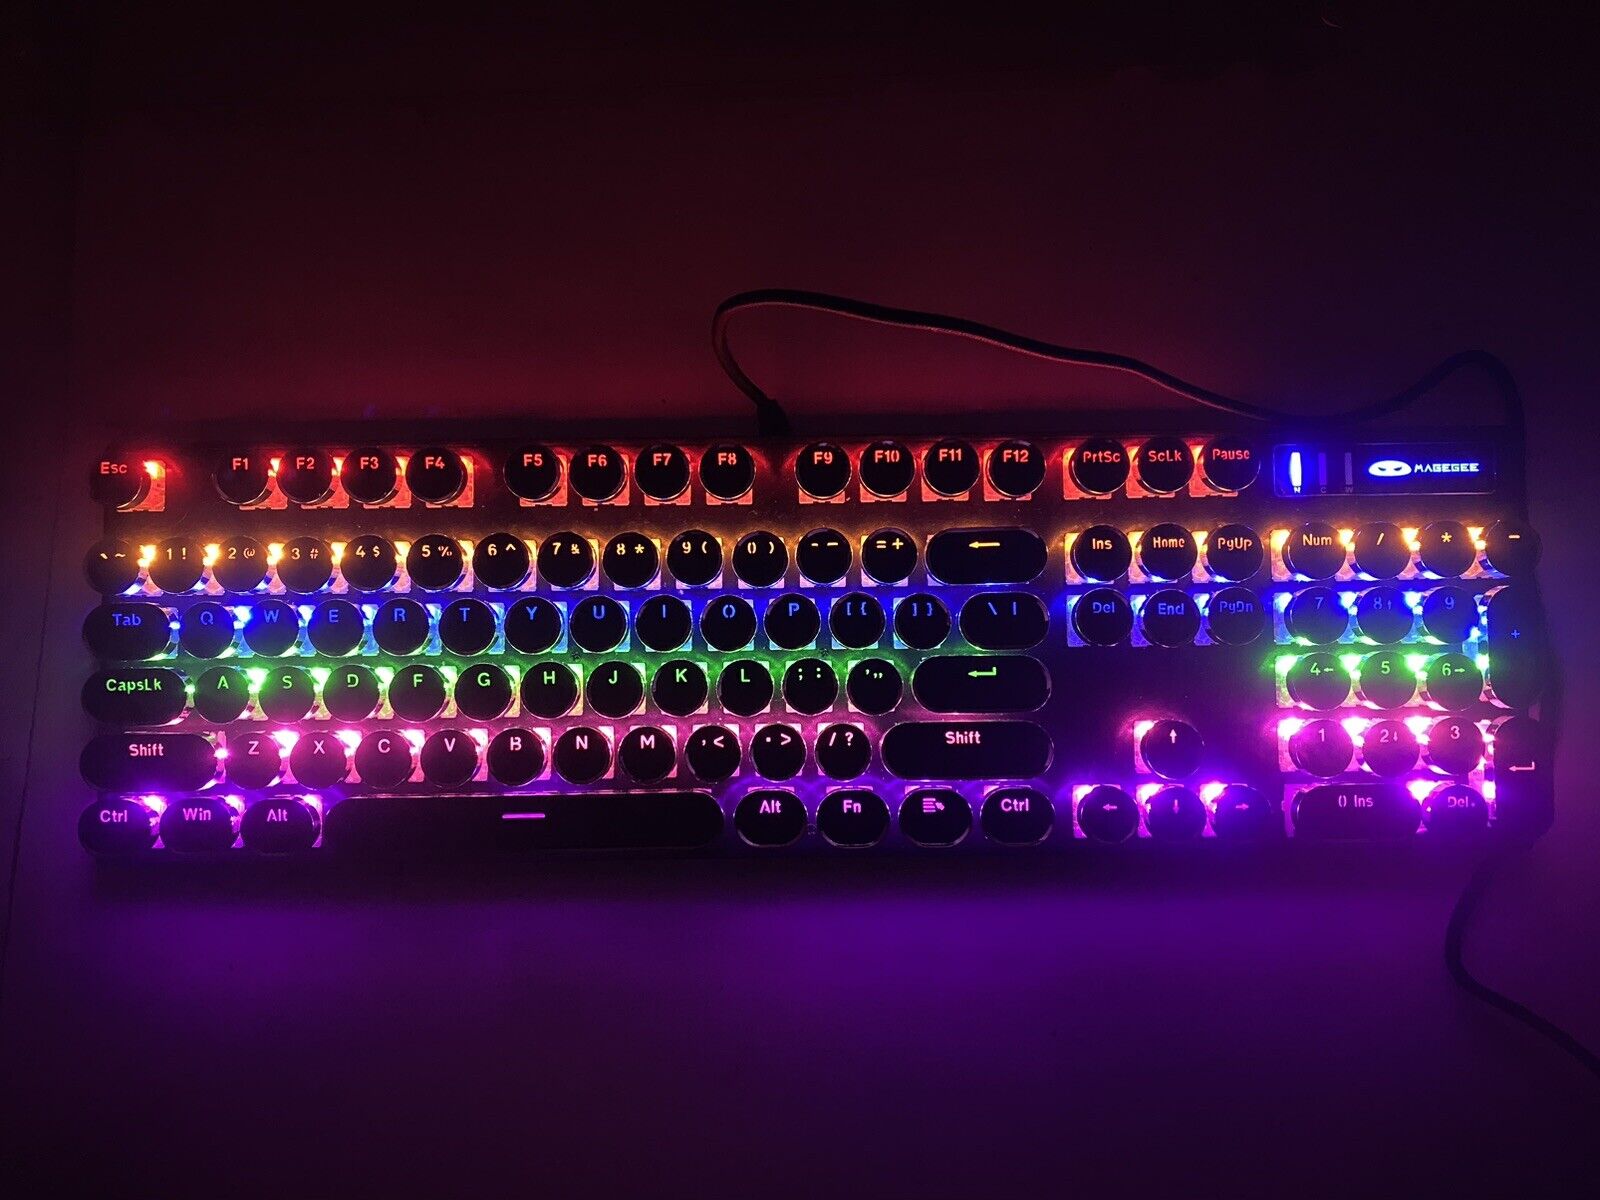 MK-STORM  MAGEGEE  Mechanical Gaming Keyboard with Typewriter Keys Lights Up